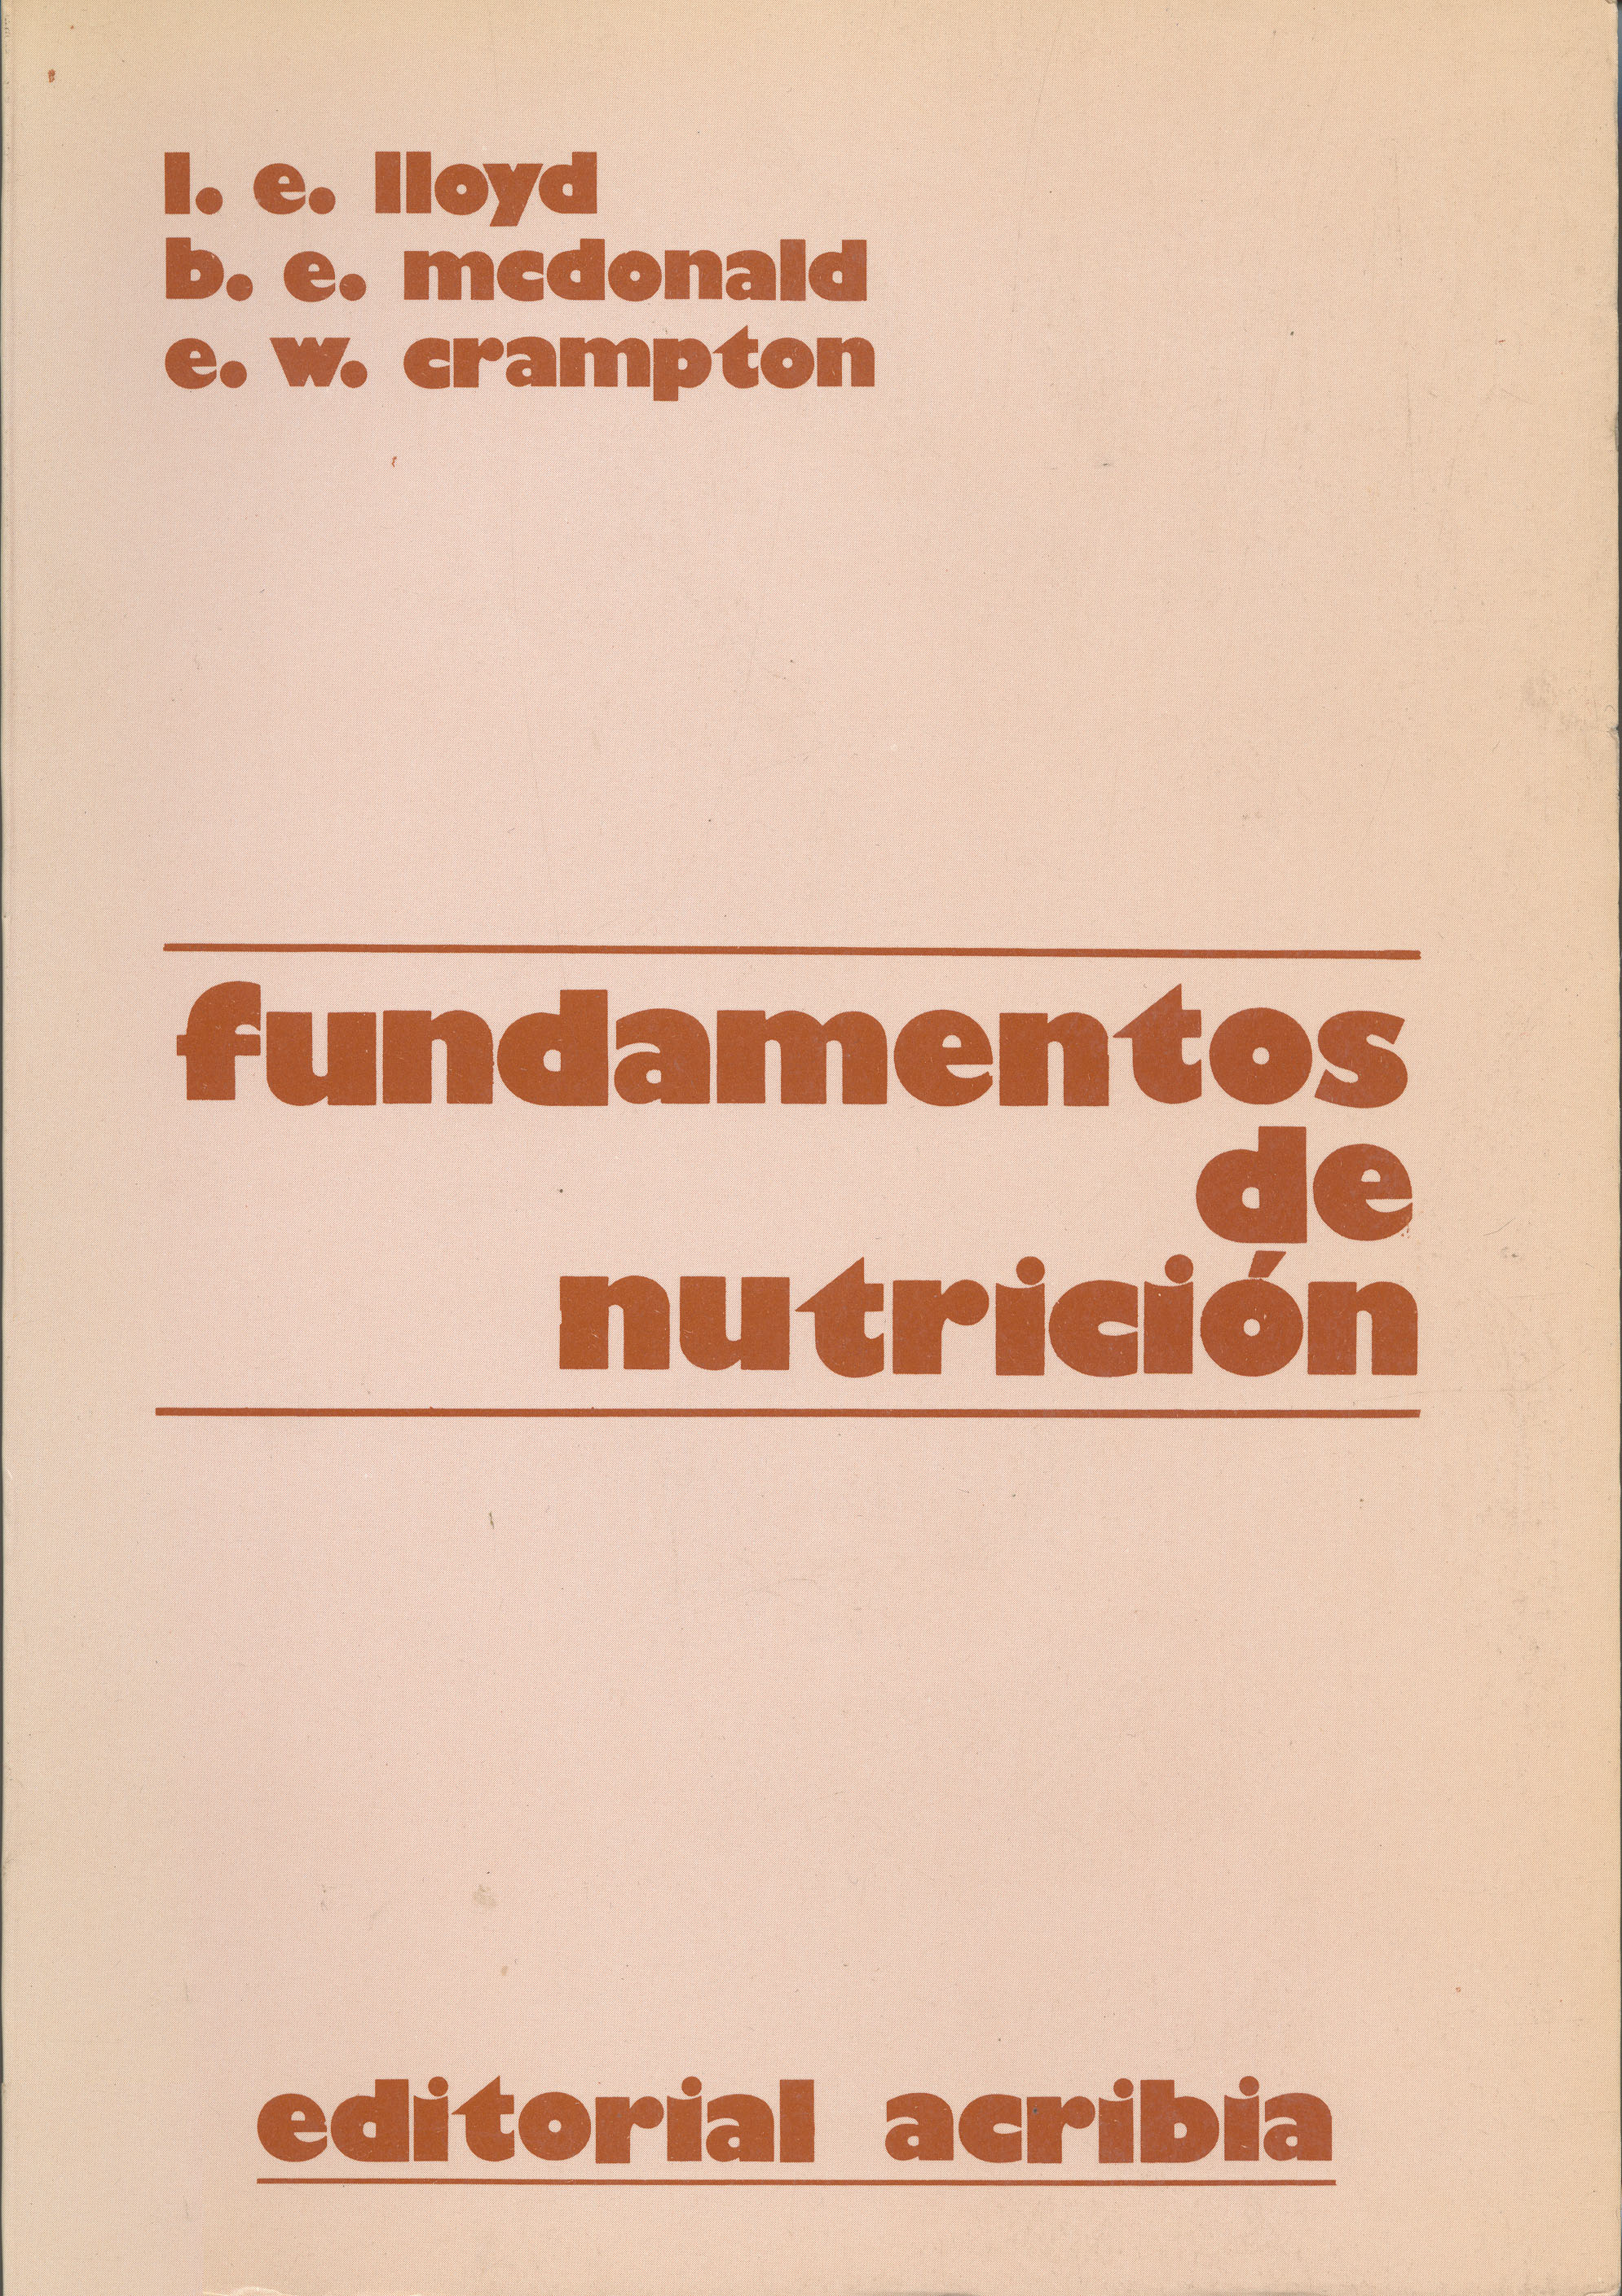 Fundamentos de nutrición - Editorial Acribia, .